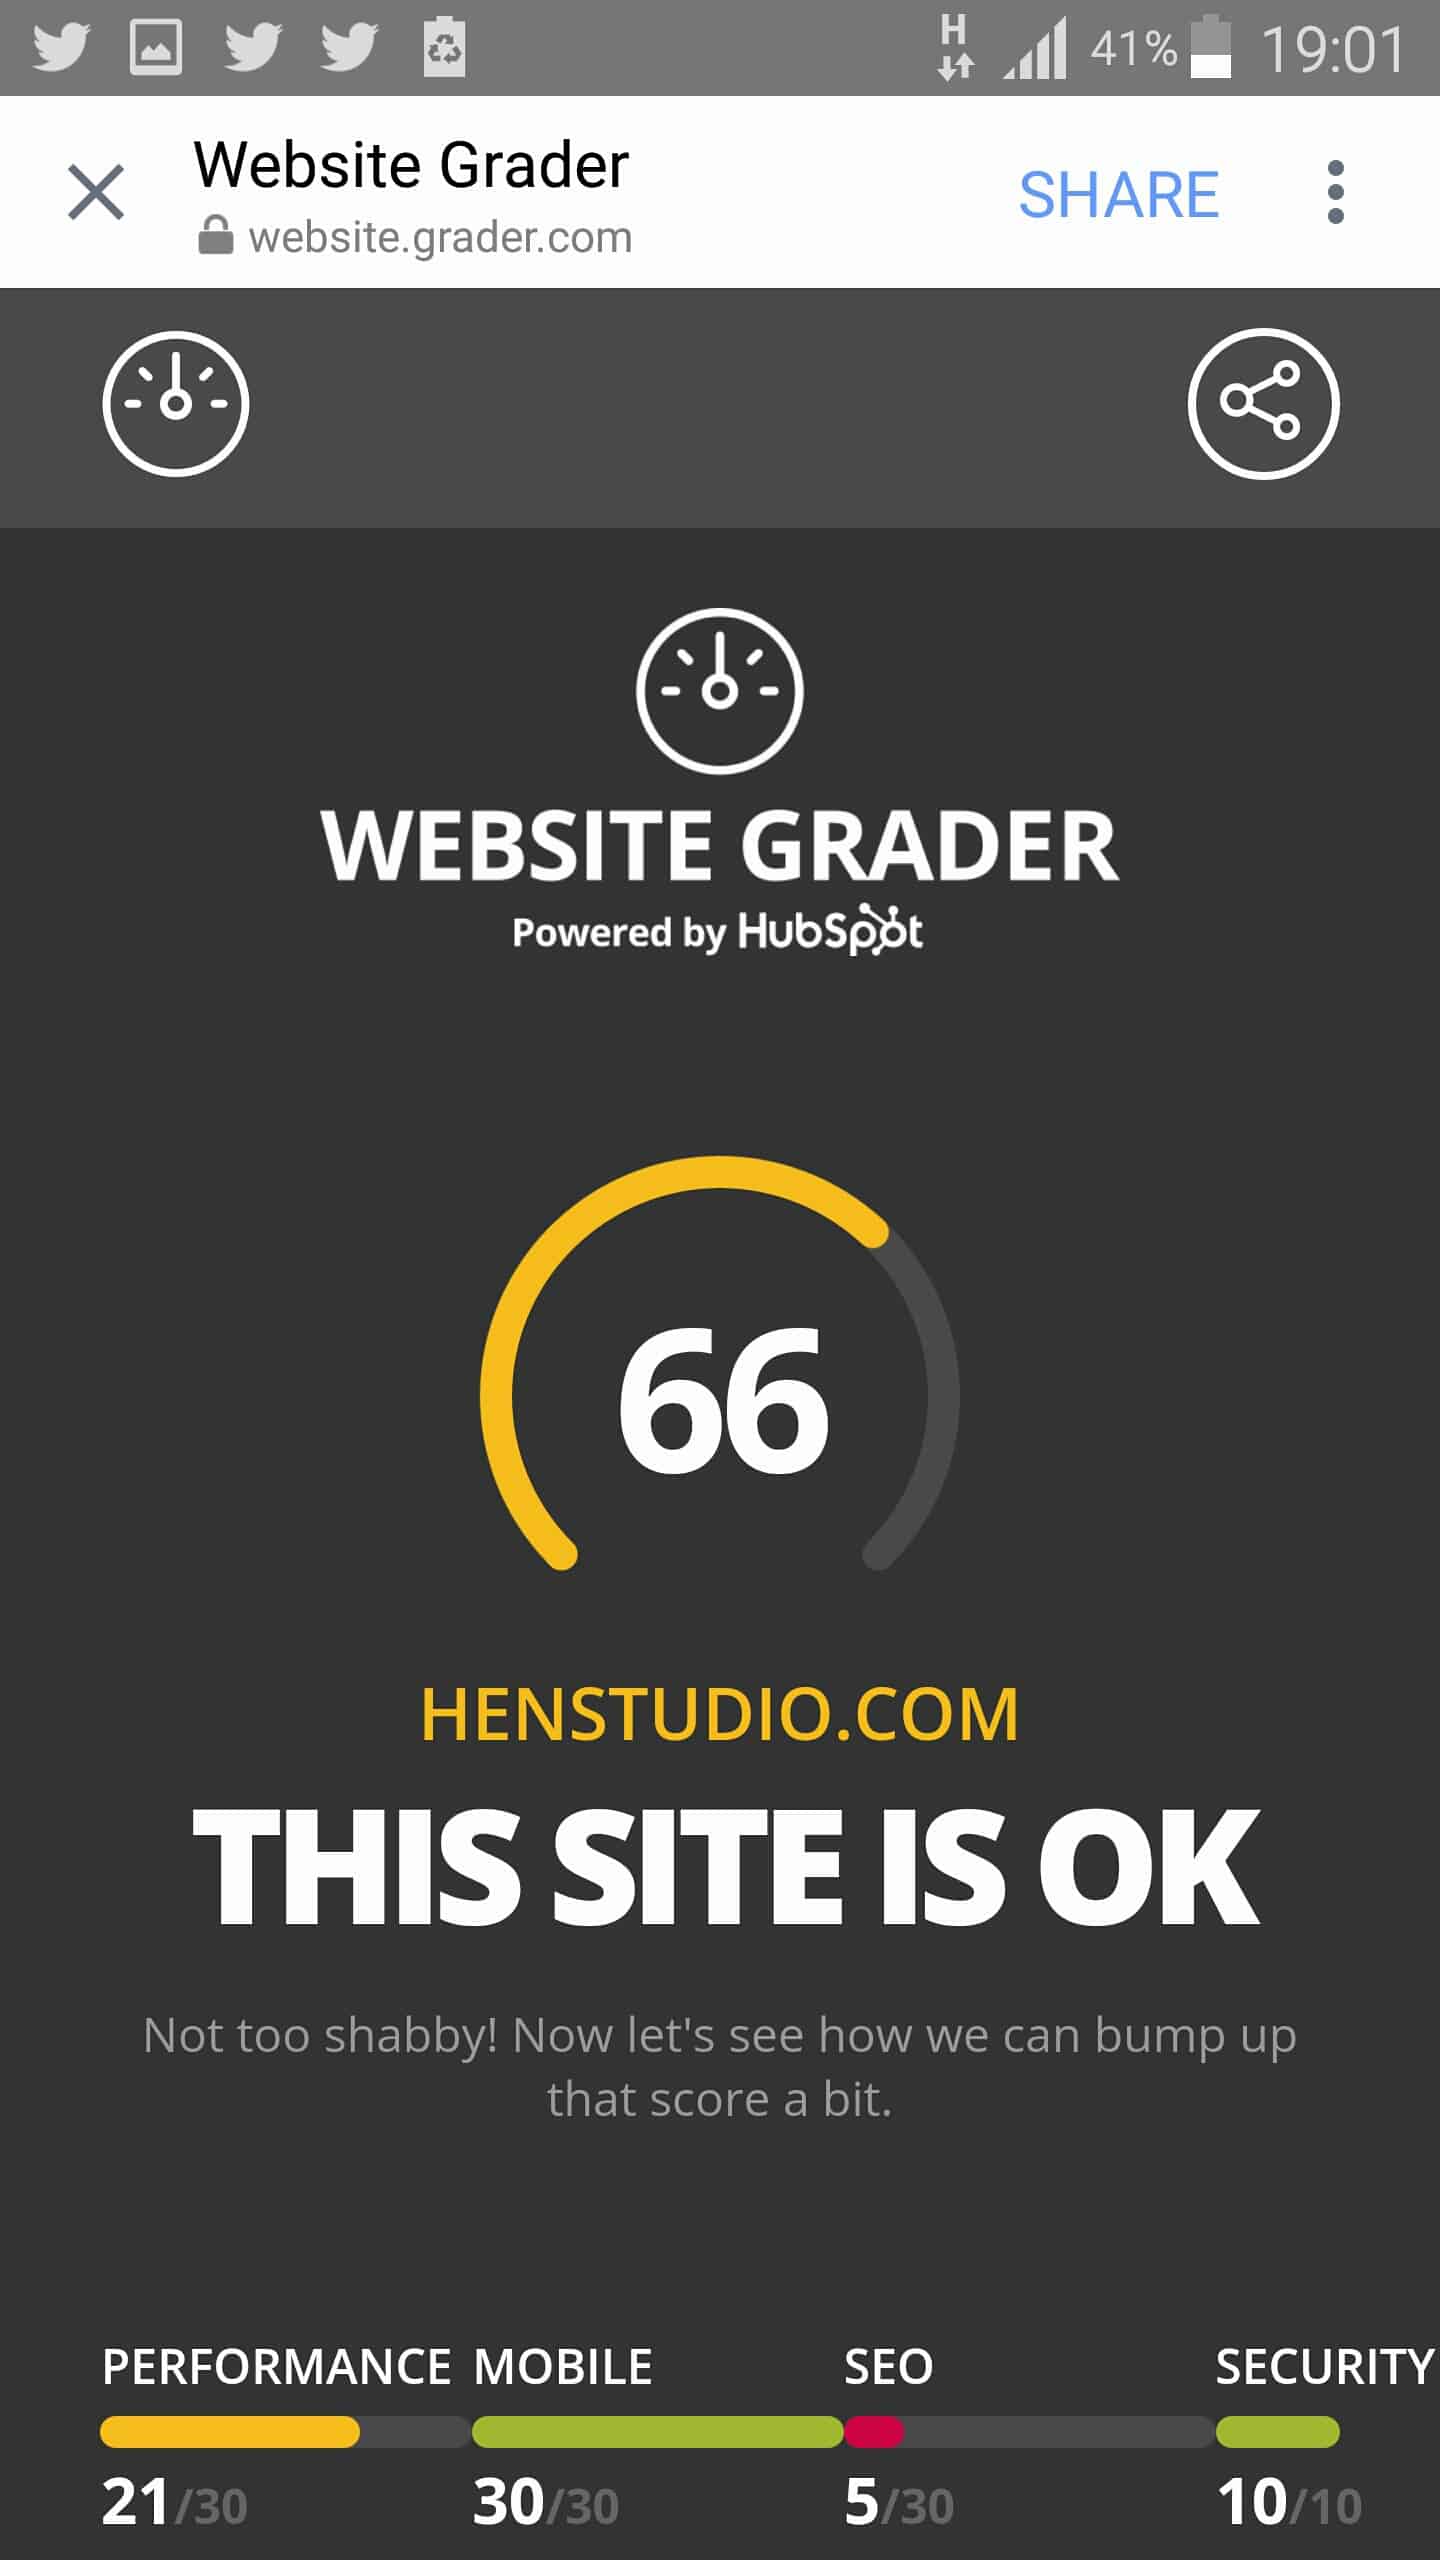 hubspot website grader clarence ling testing Hen Design Studio's website